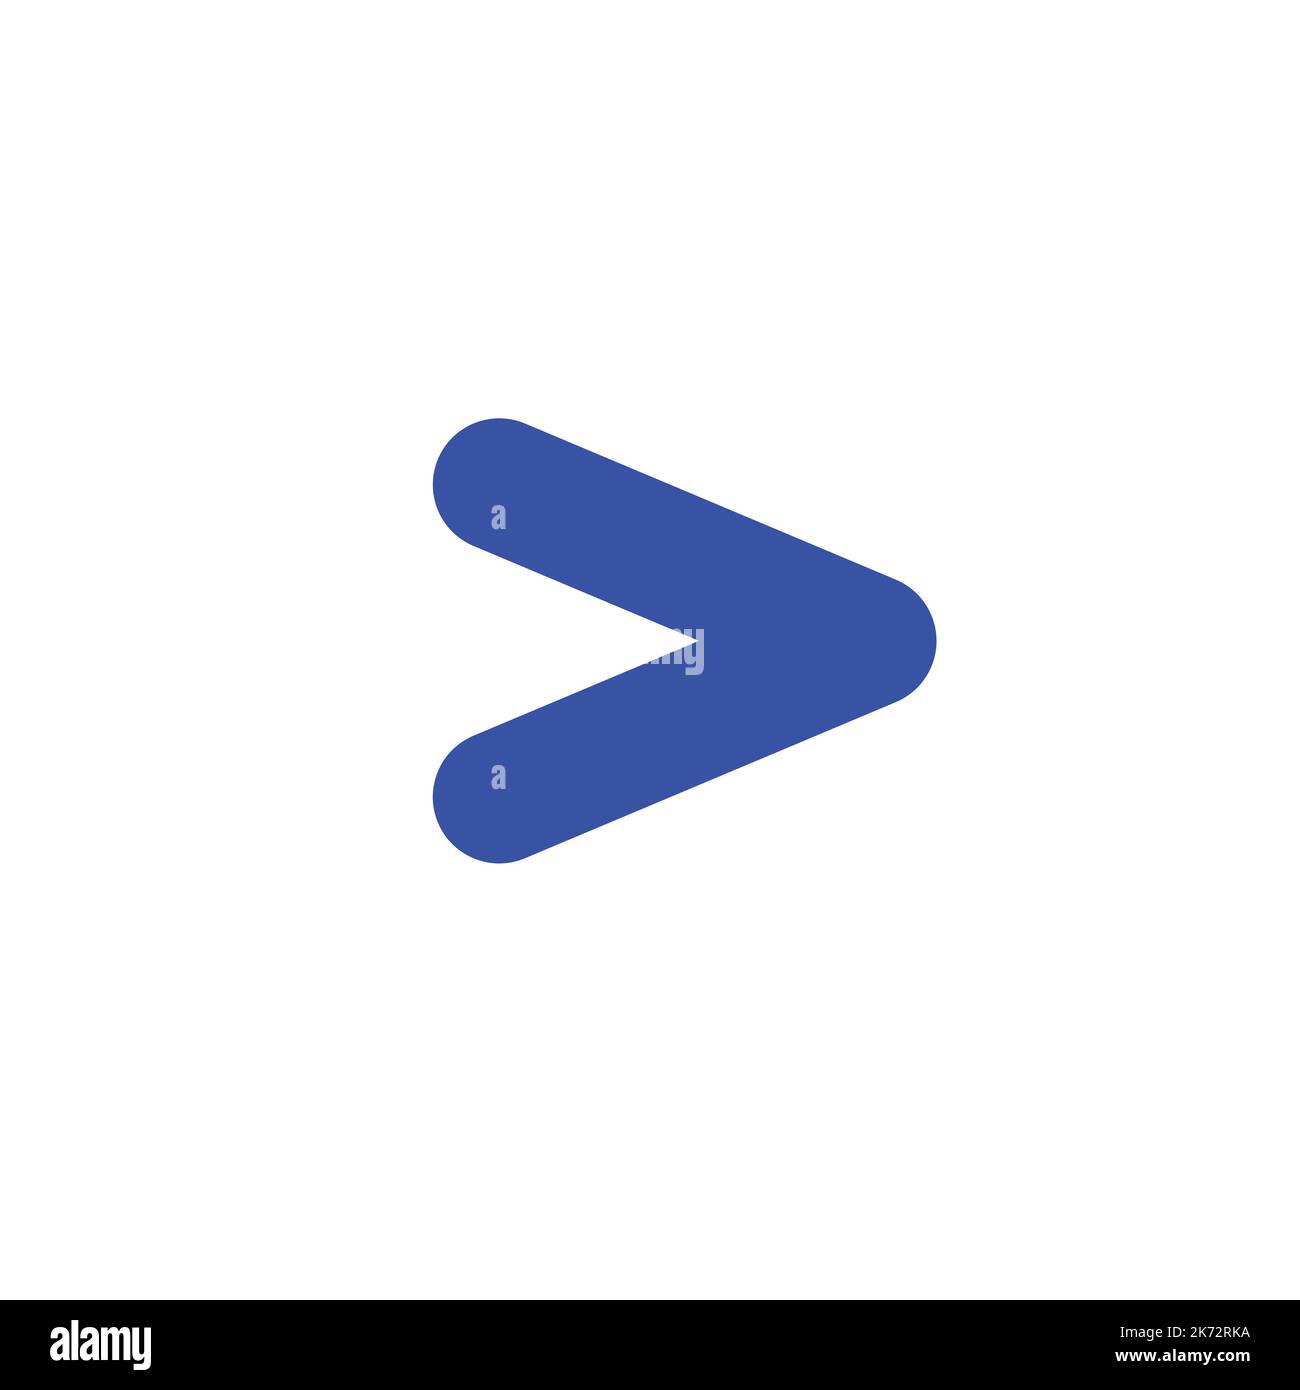 blue arrow icon on white background. Stock Vector